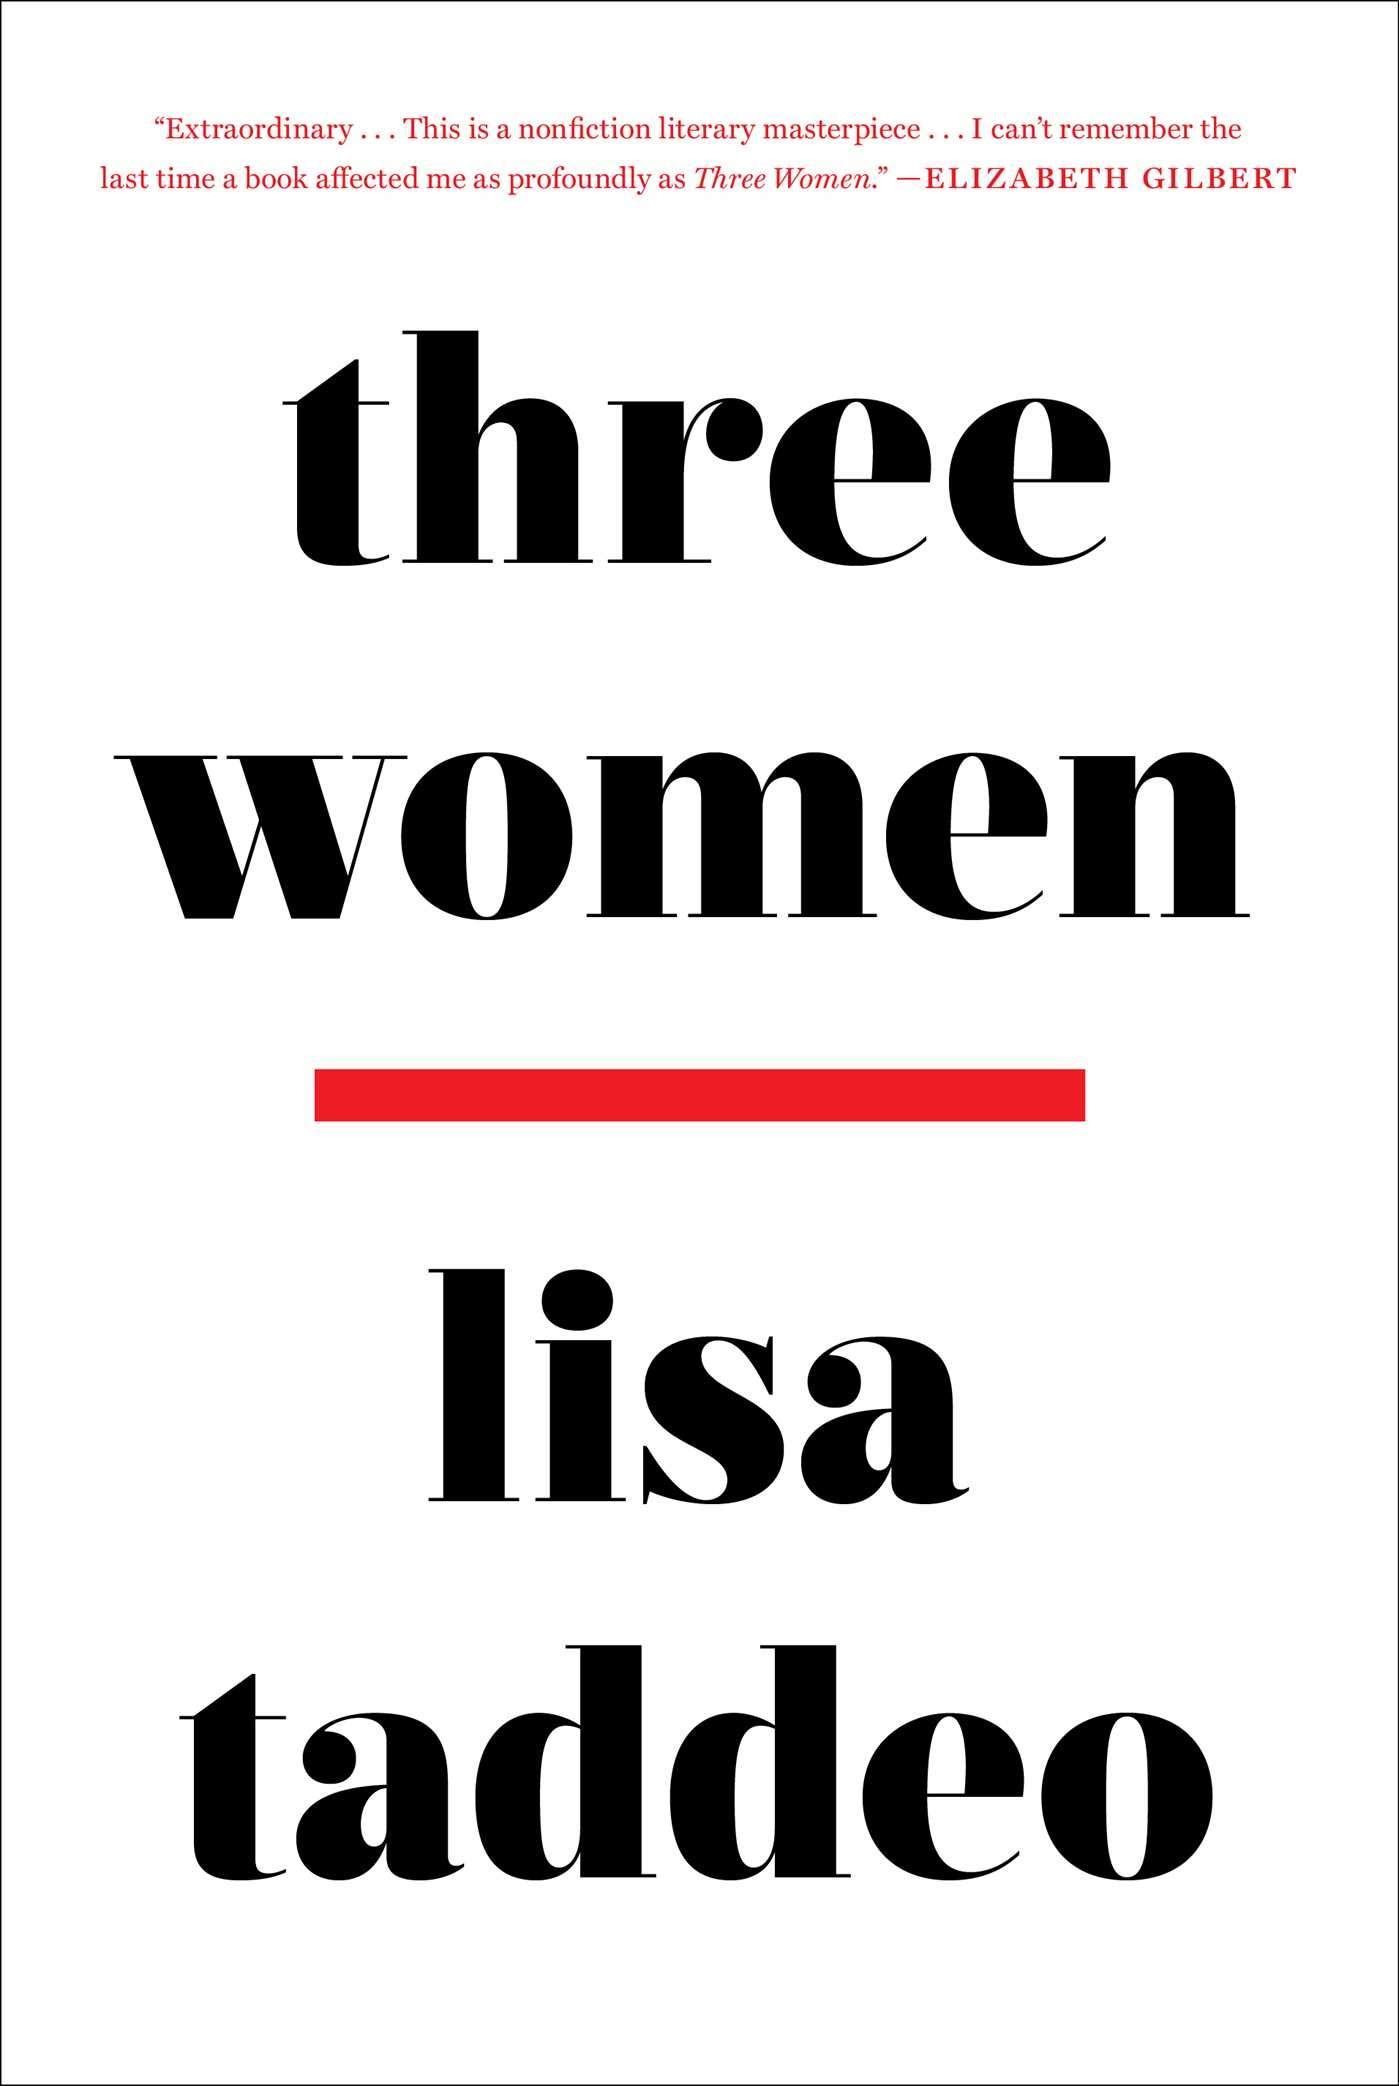 States of Desire: On Lisa Taddeo’s “Three Women”